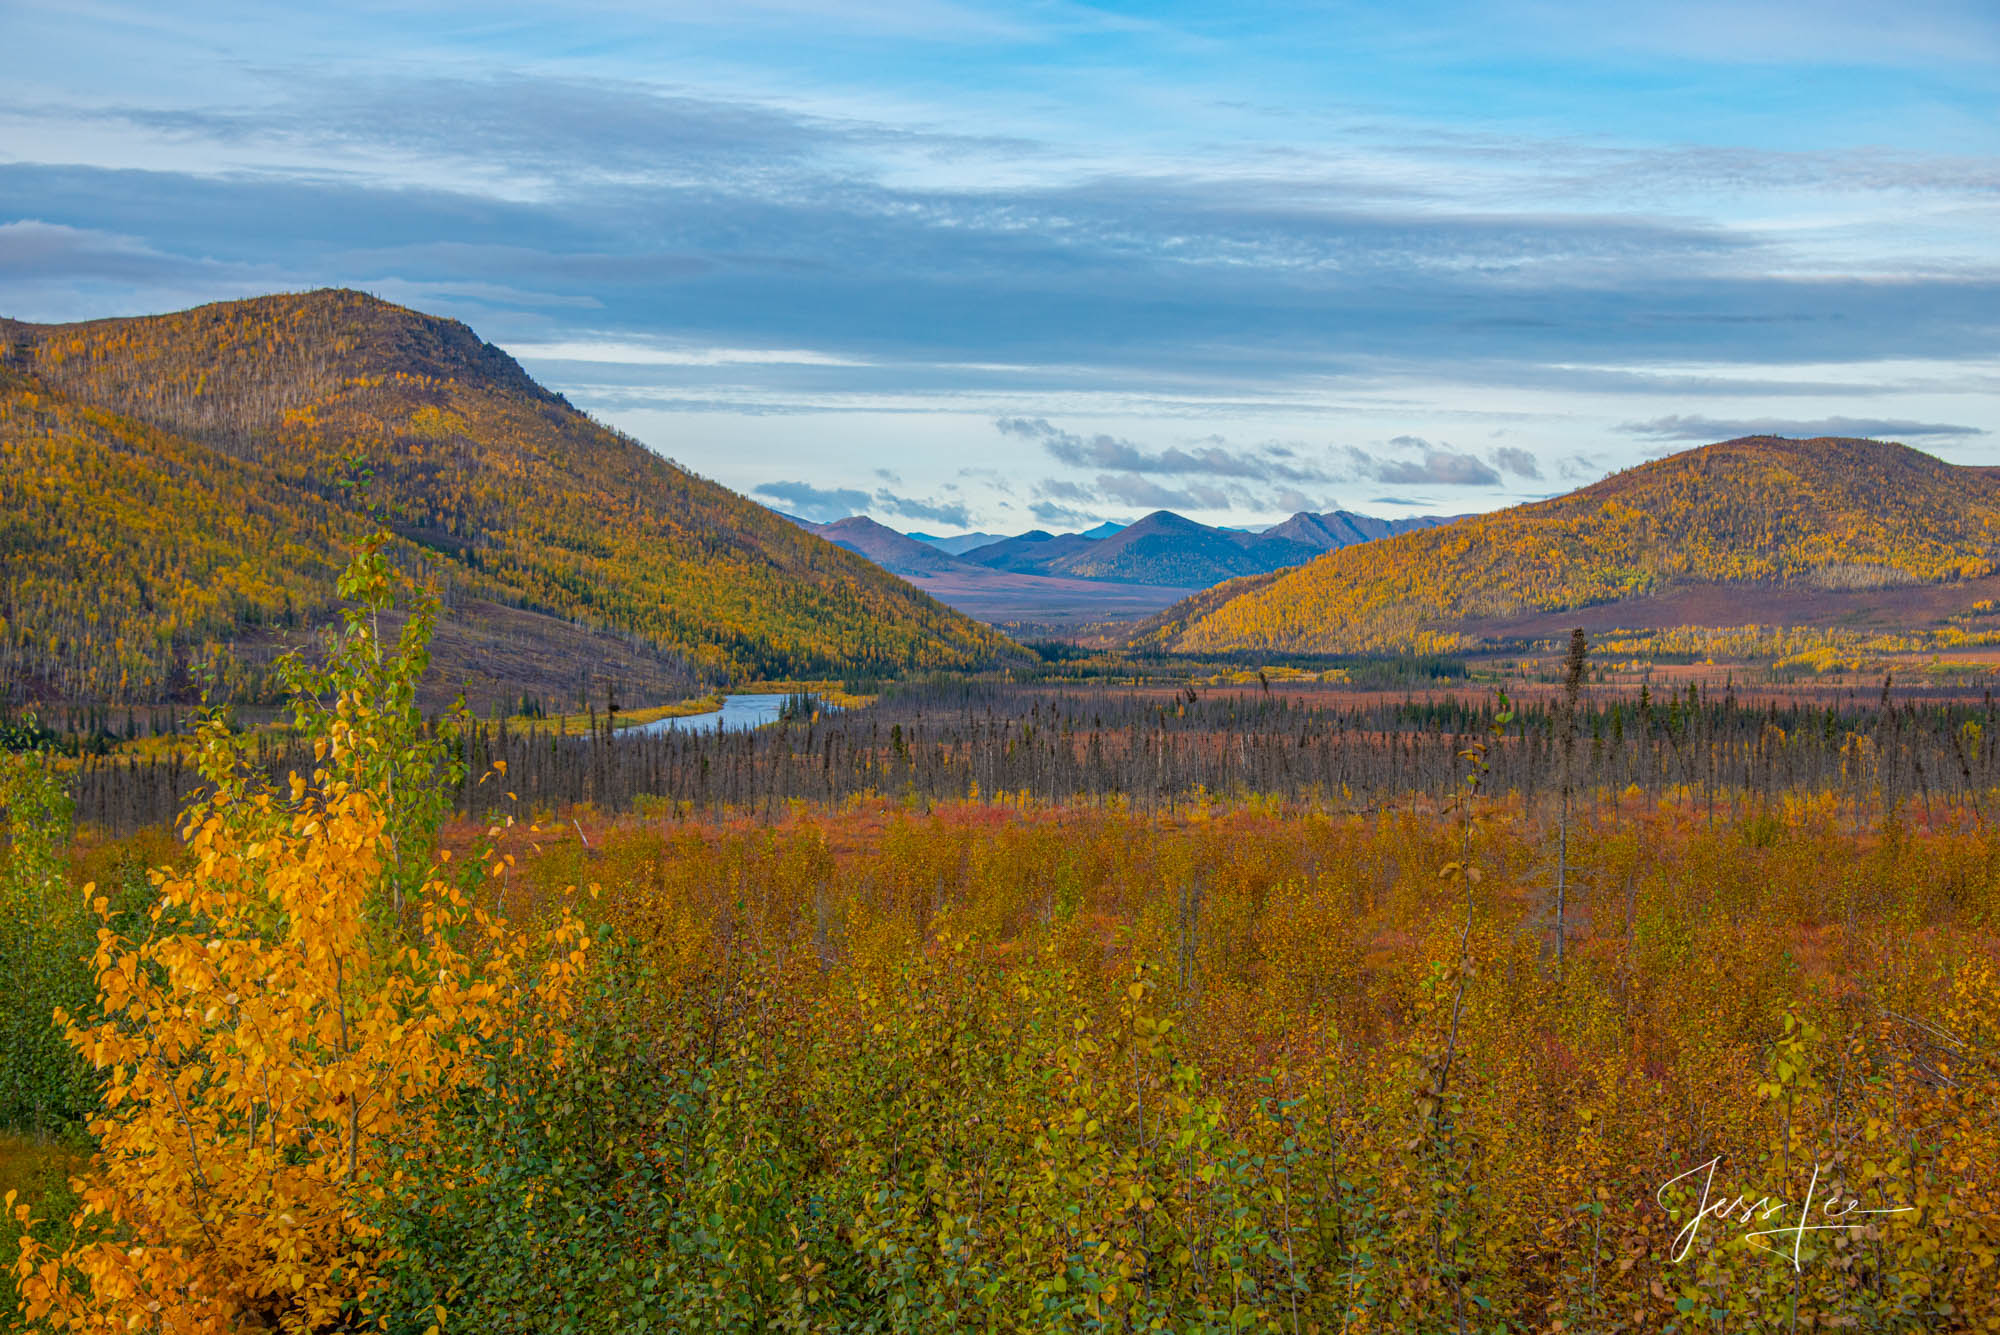 Autumn creeping in on the hills in Alaska's arctic. 